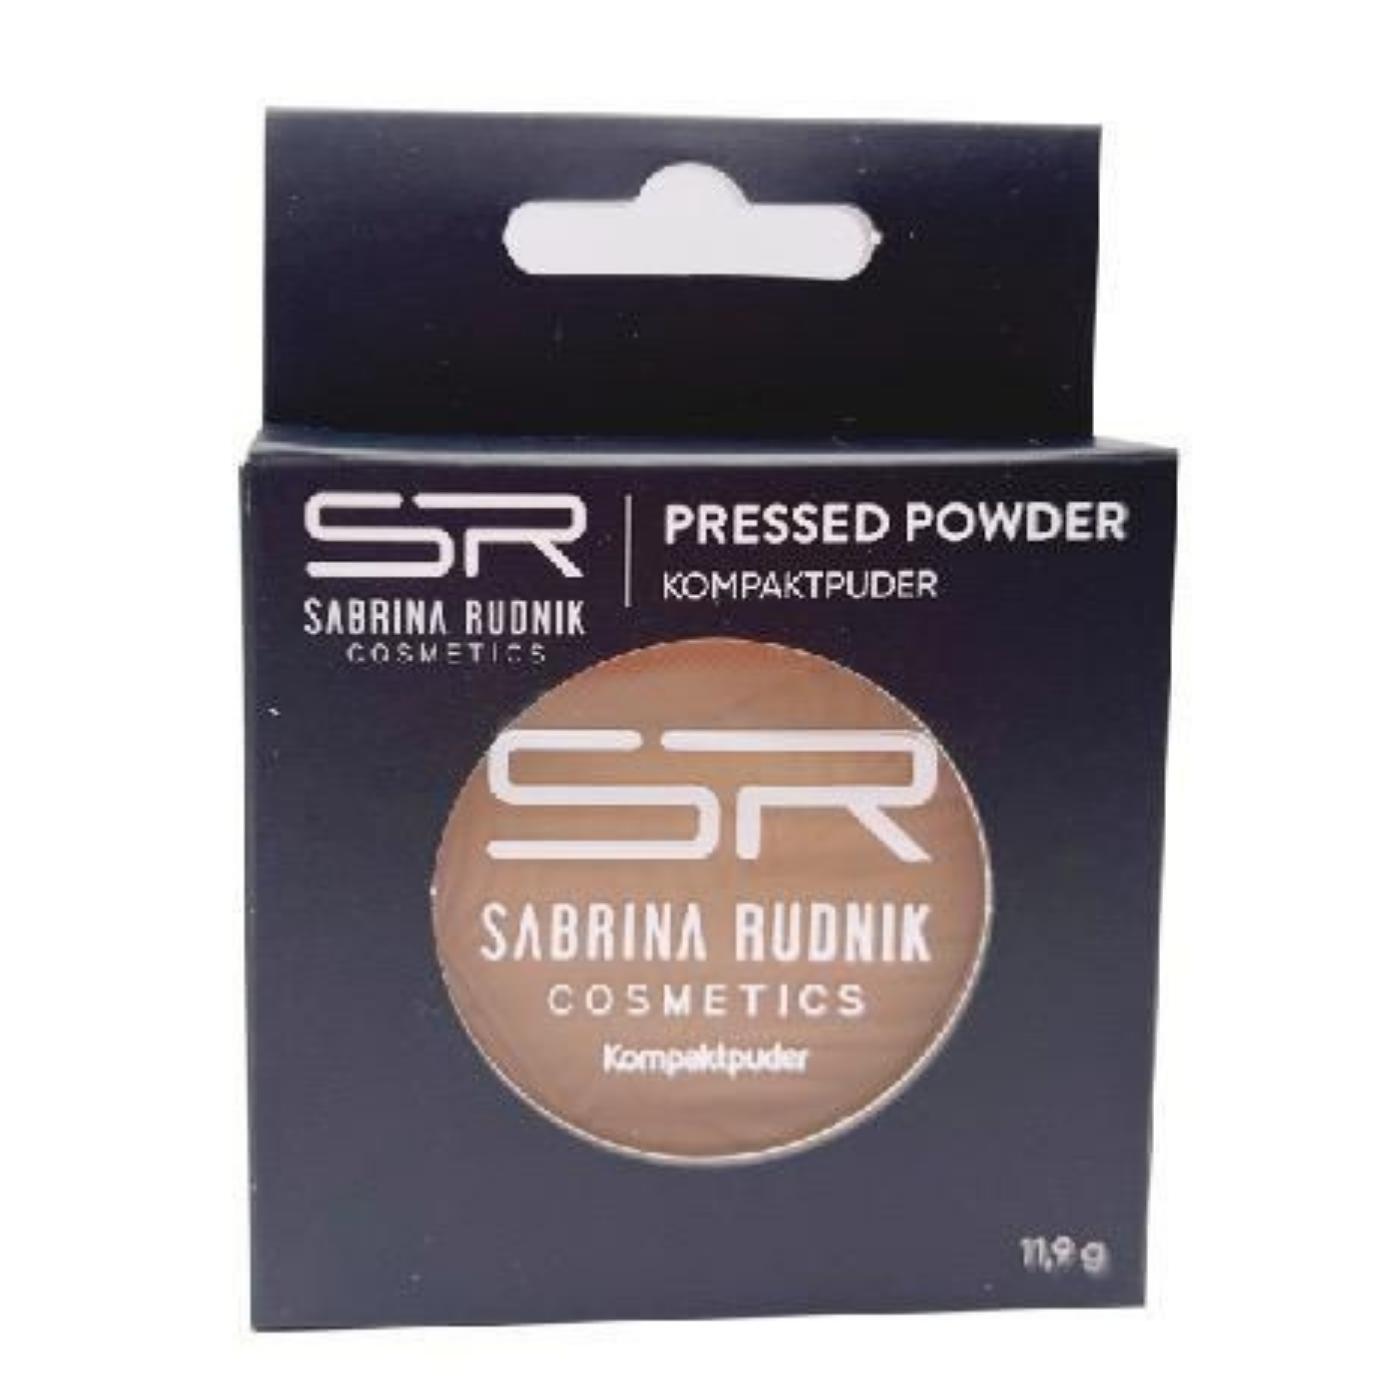 Sabrina Rudnik Kompaktpuder, Compact Powder - Puder Makeup verpackt